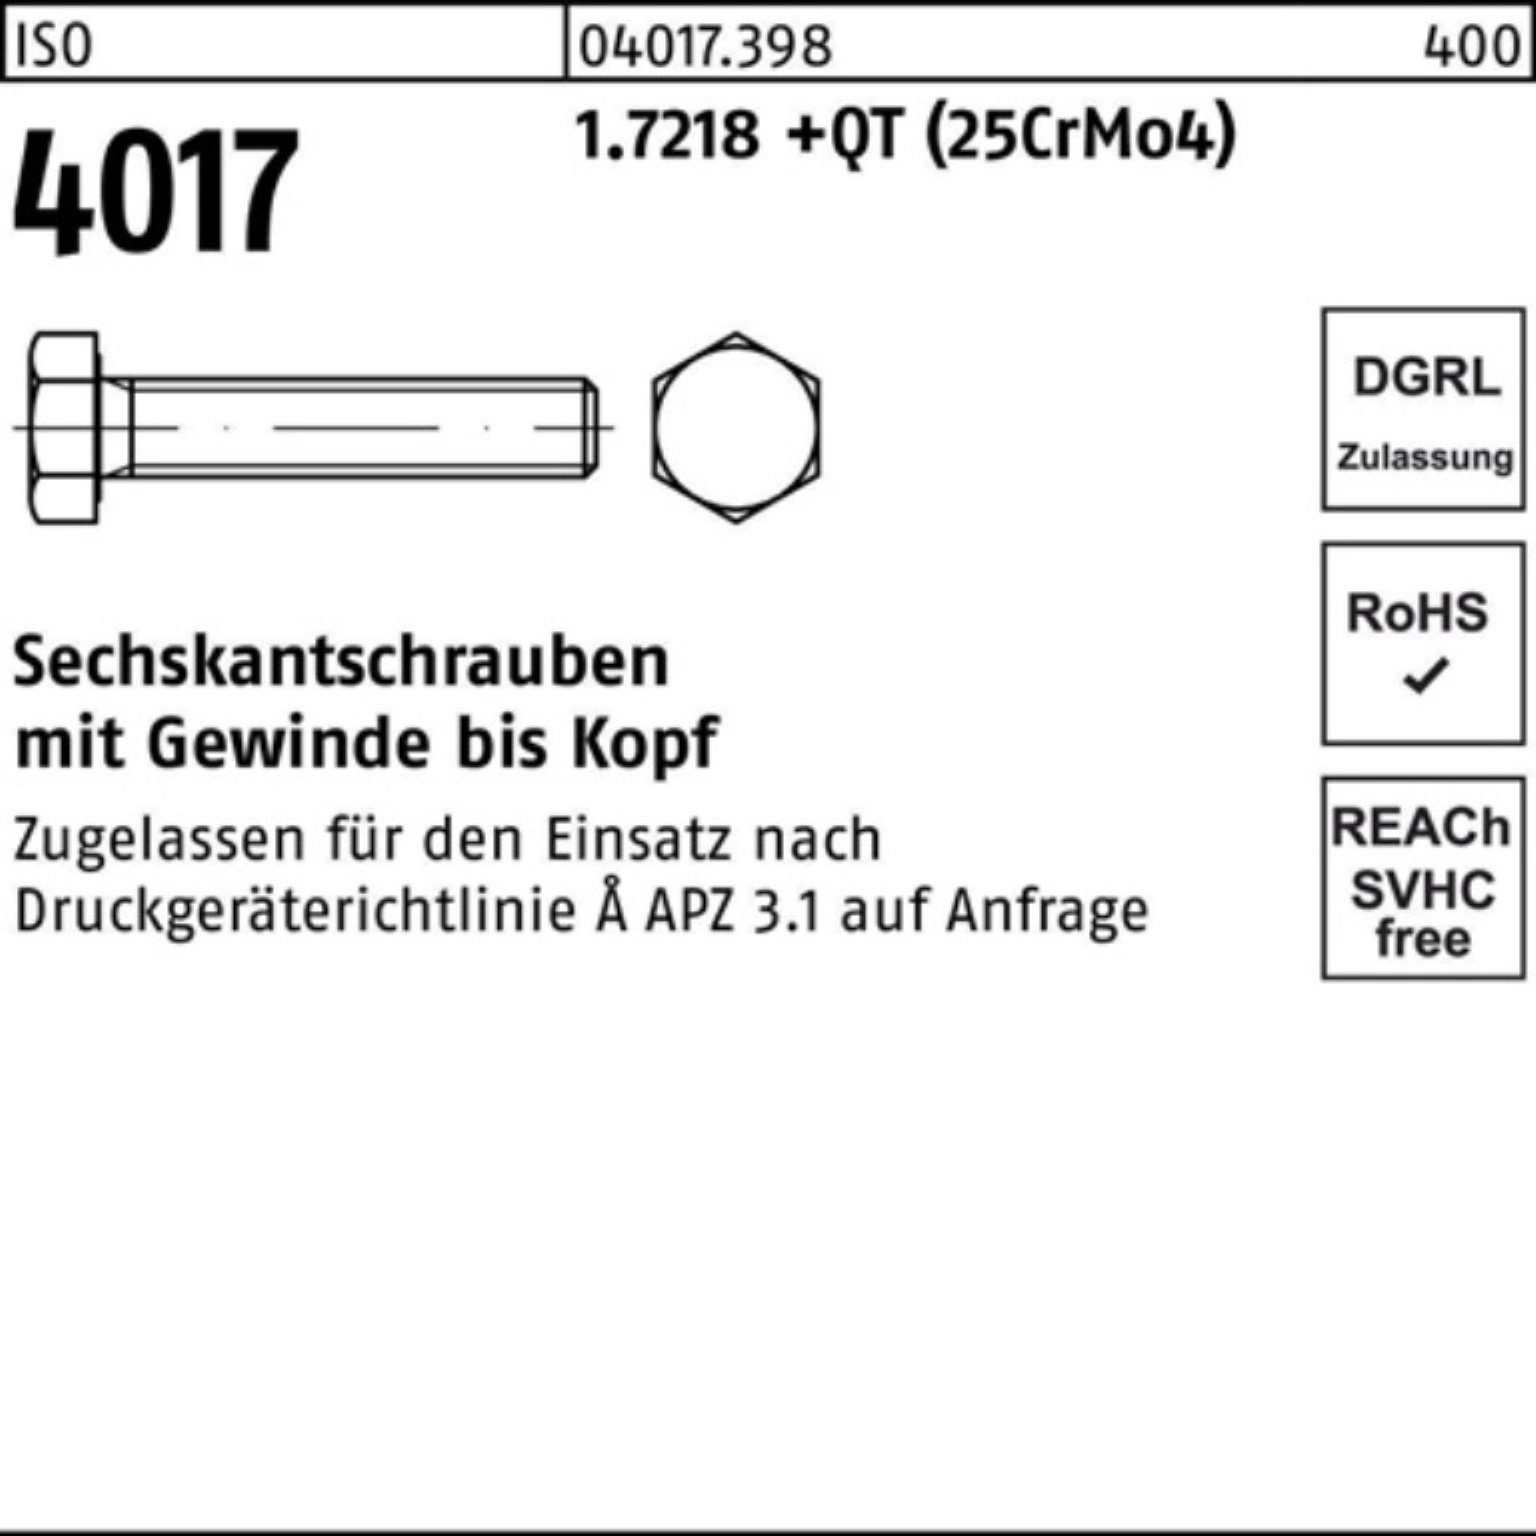 Bufab Sechskantschraube 100er 120 (25CrMo4) VG ISO +QT 4017 1.7218 Pack Sechskantschraube M12x